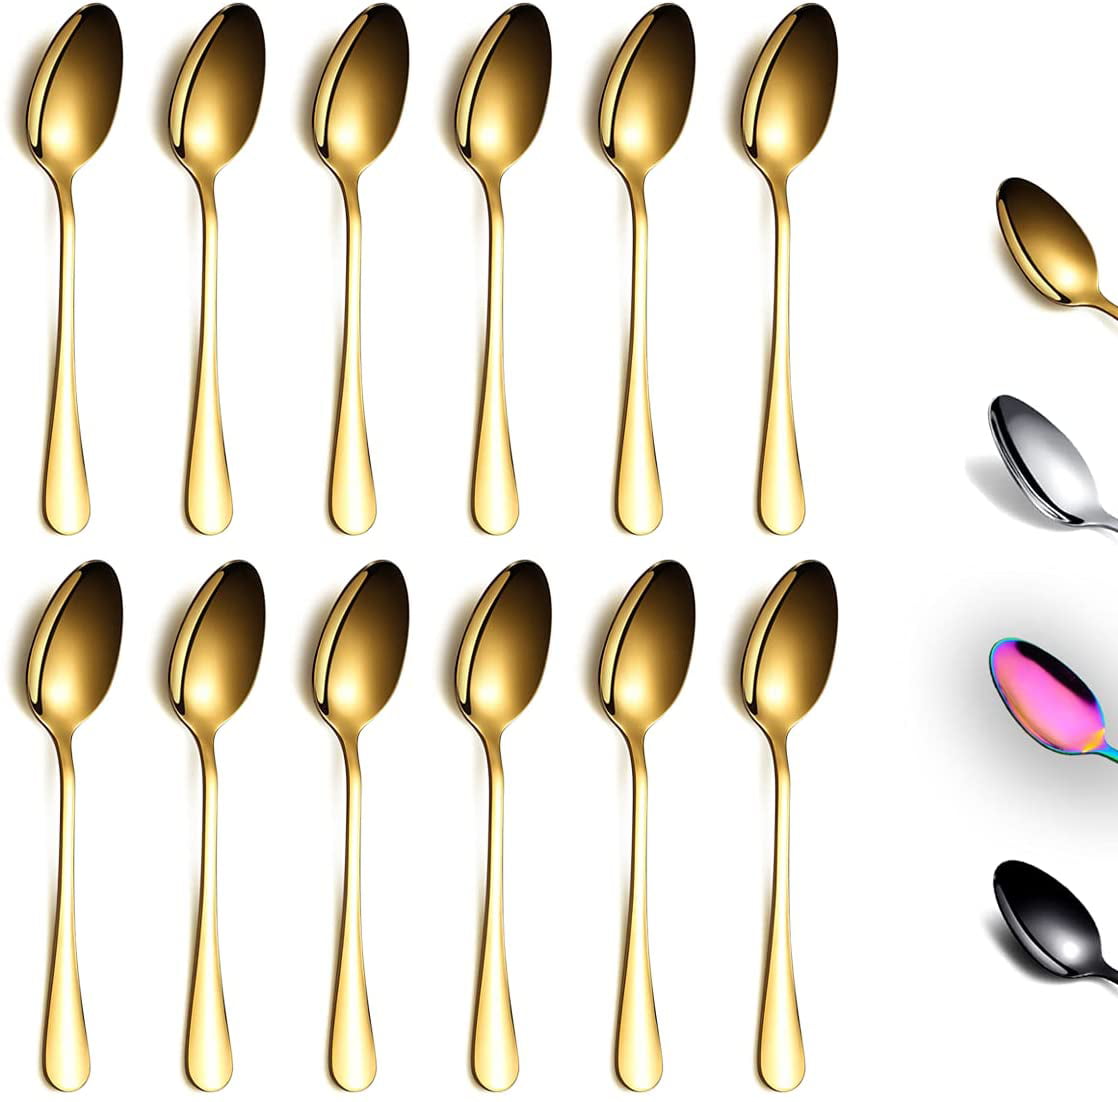 Evokk Cutlery Home Office Kitchen Spoon 6 Stainless Steel Metal Tea Spoons 